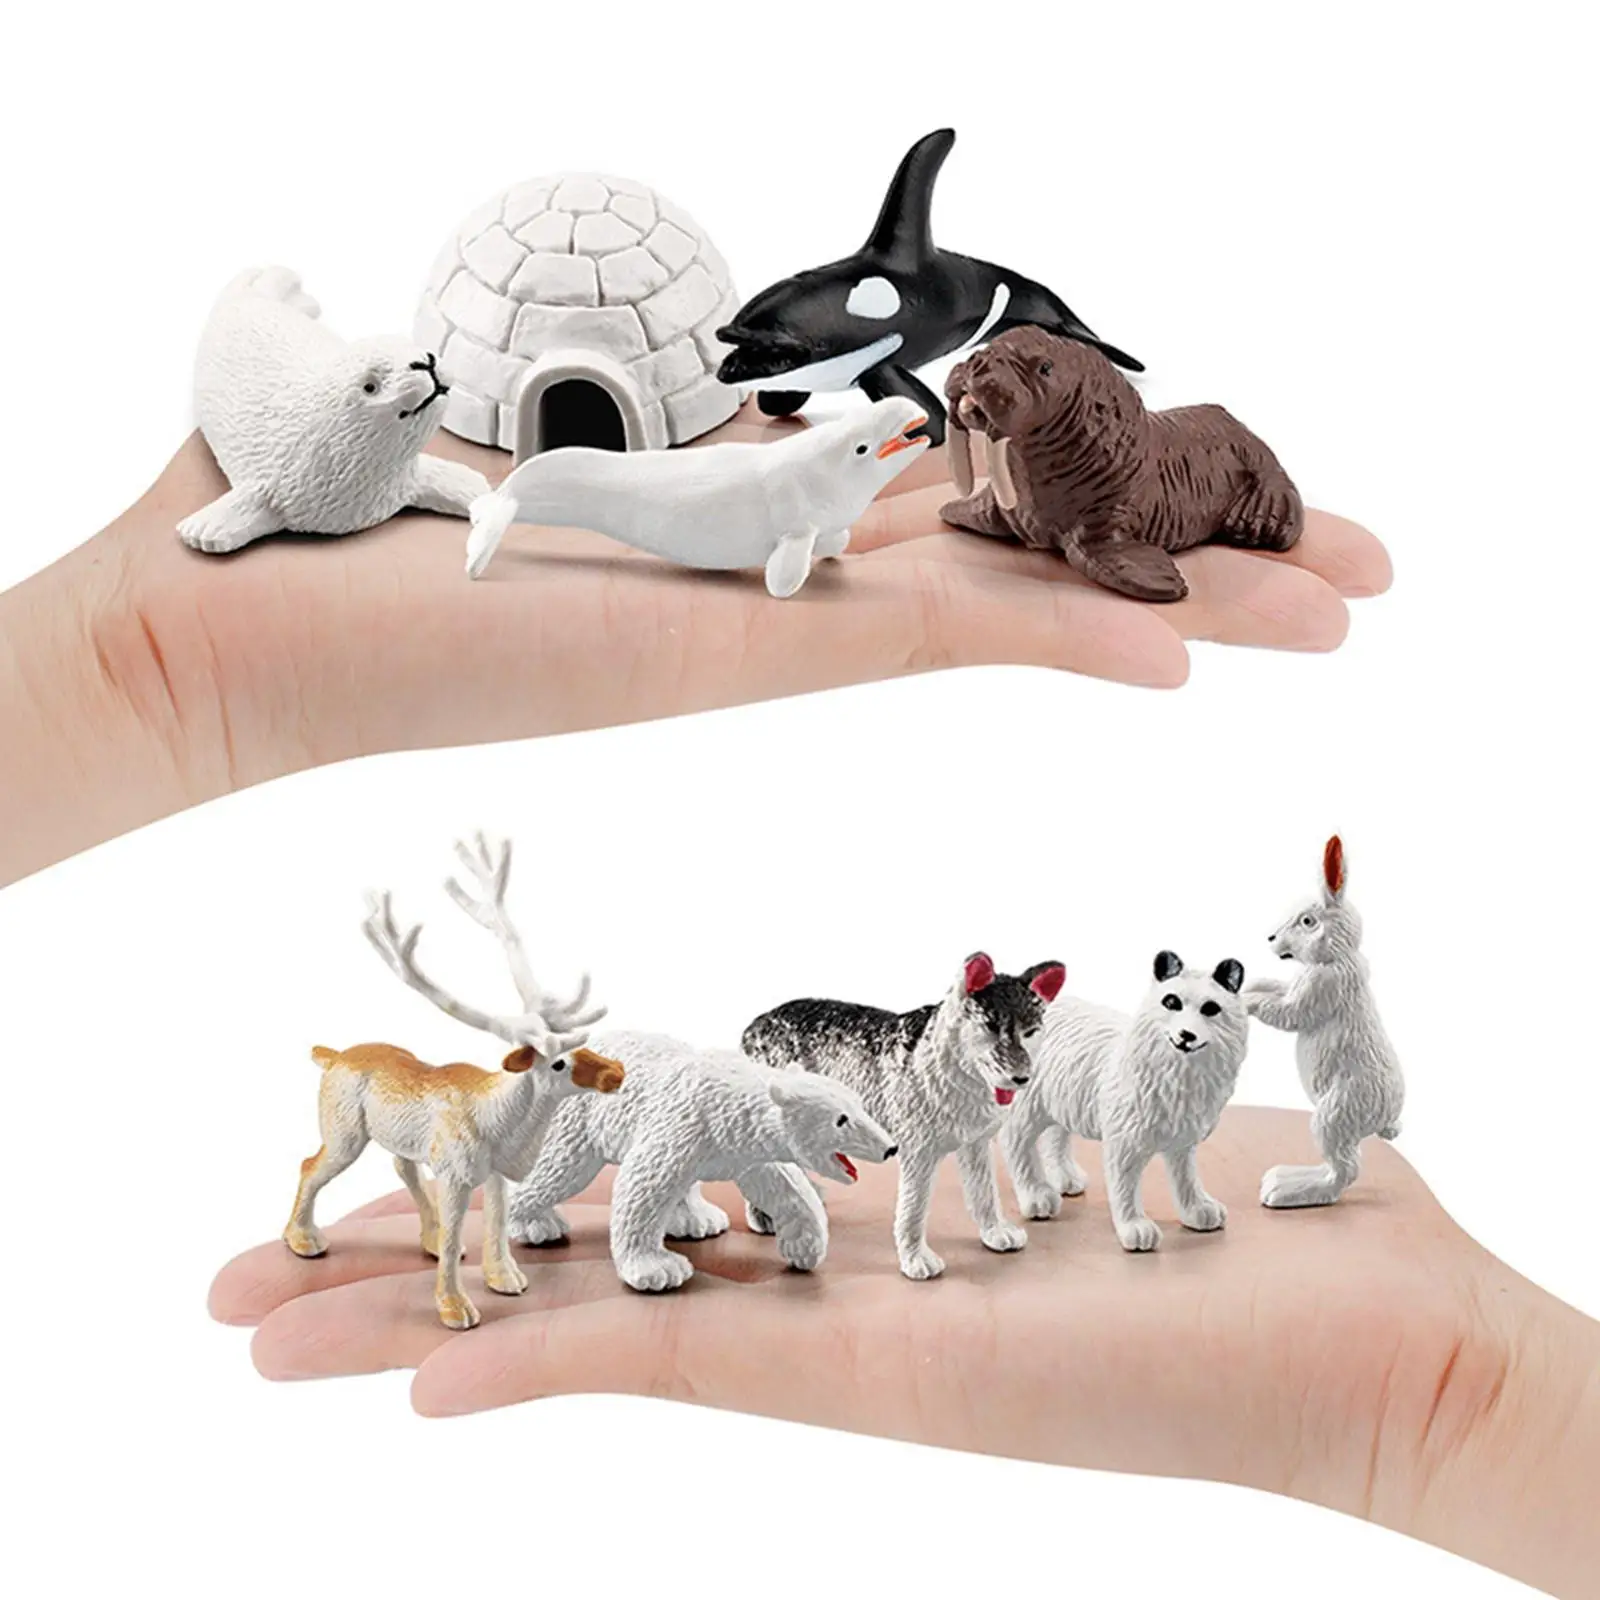 Set of 20 Realistic Polar Animal Figurines Miniature Desktop Decor Kids Gift